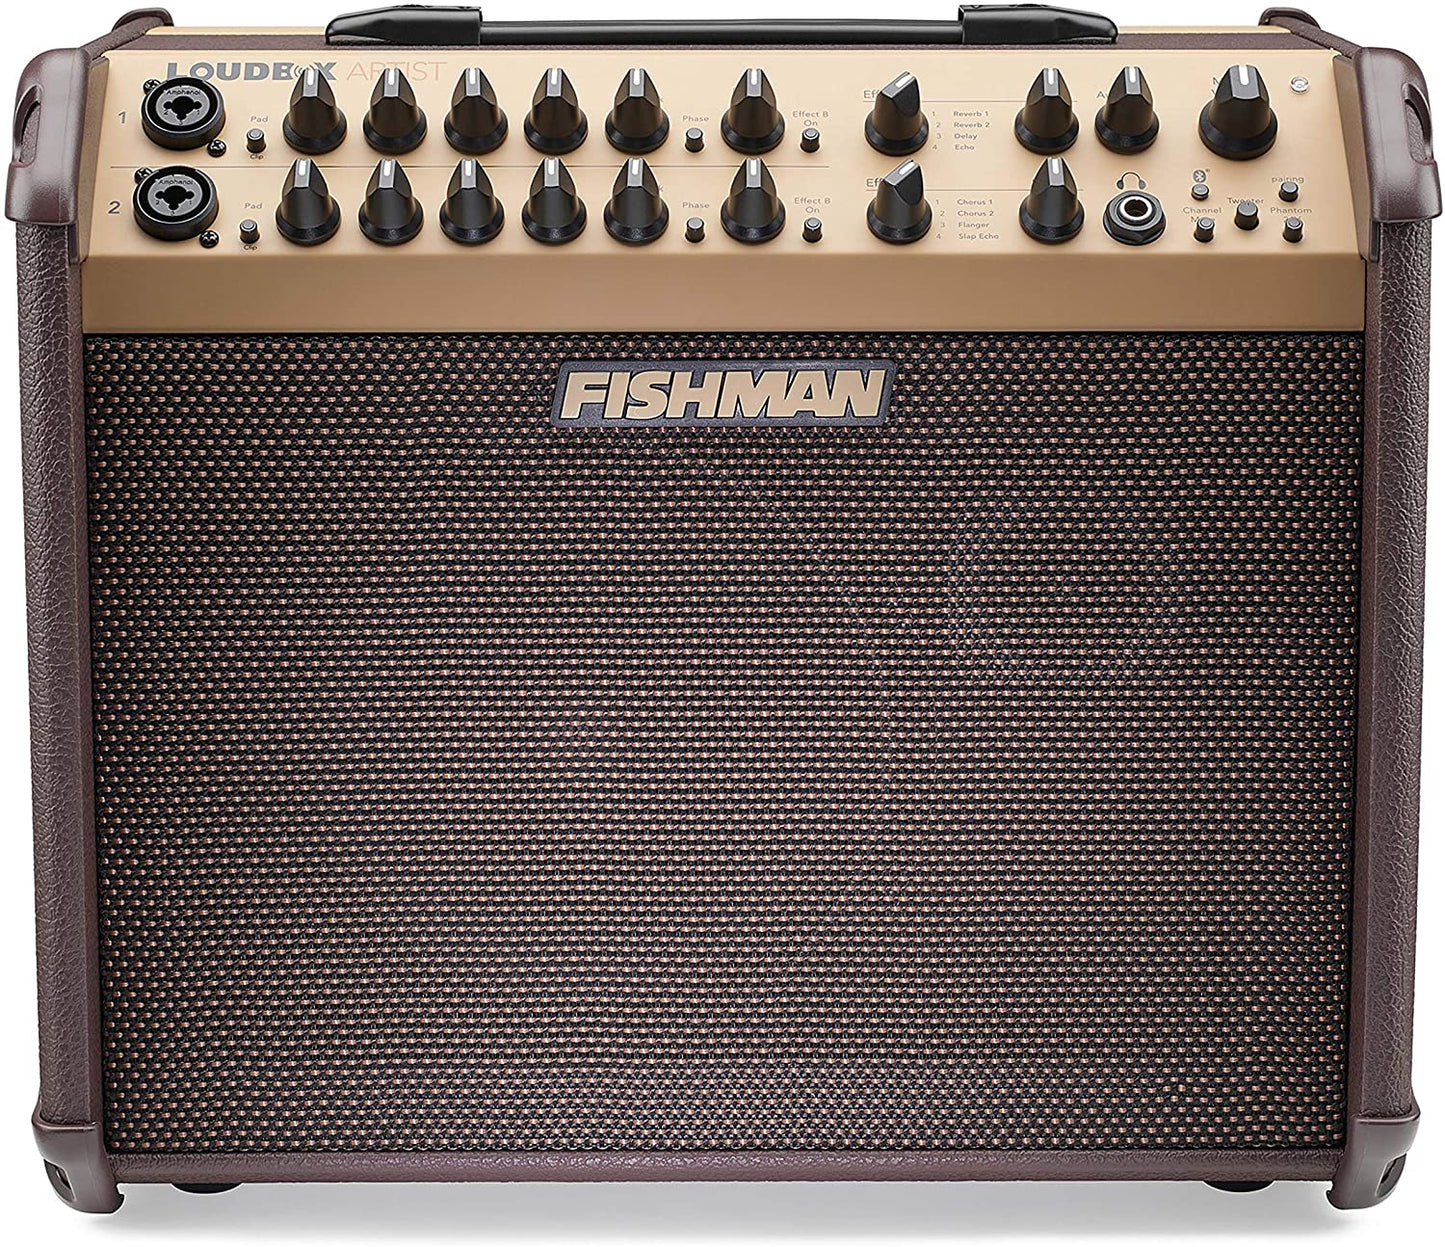 Fishman Loud Box Artist Bluetooth Enabled Acoustic Guitar Amplifier